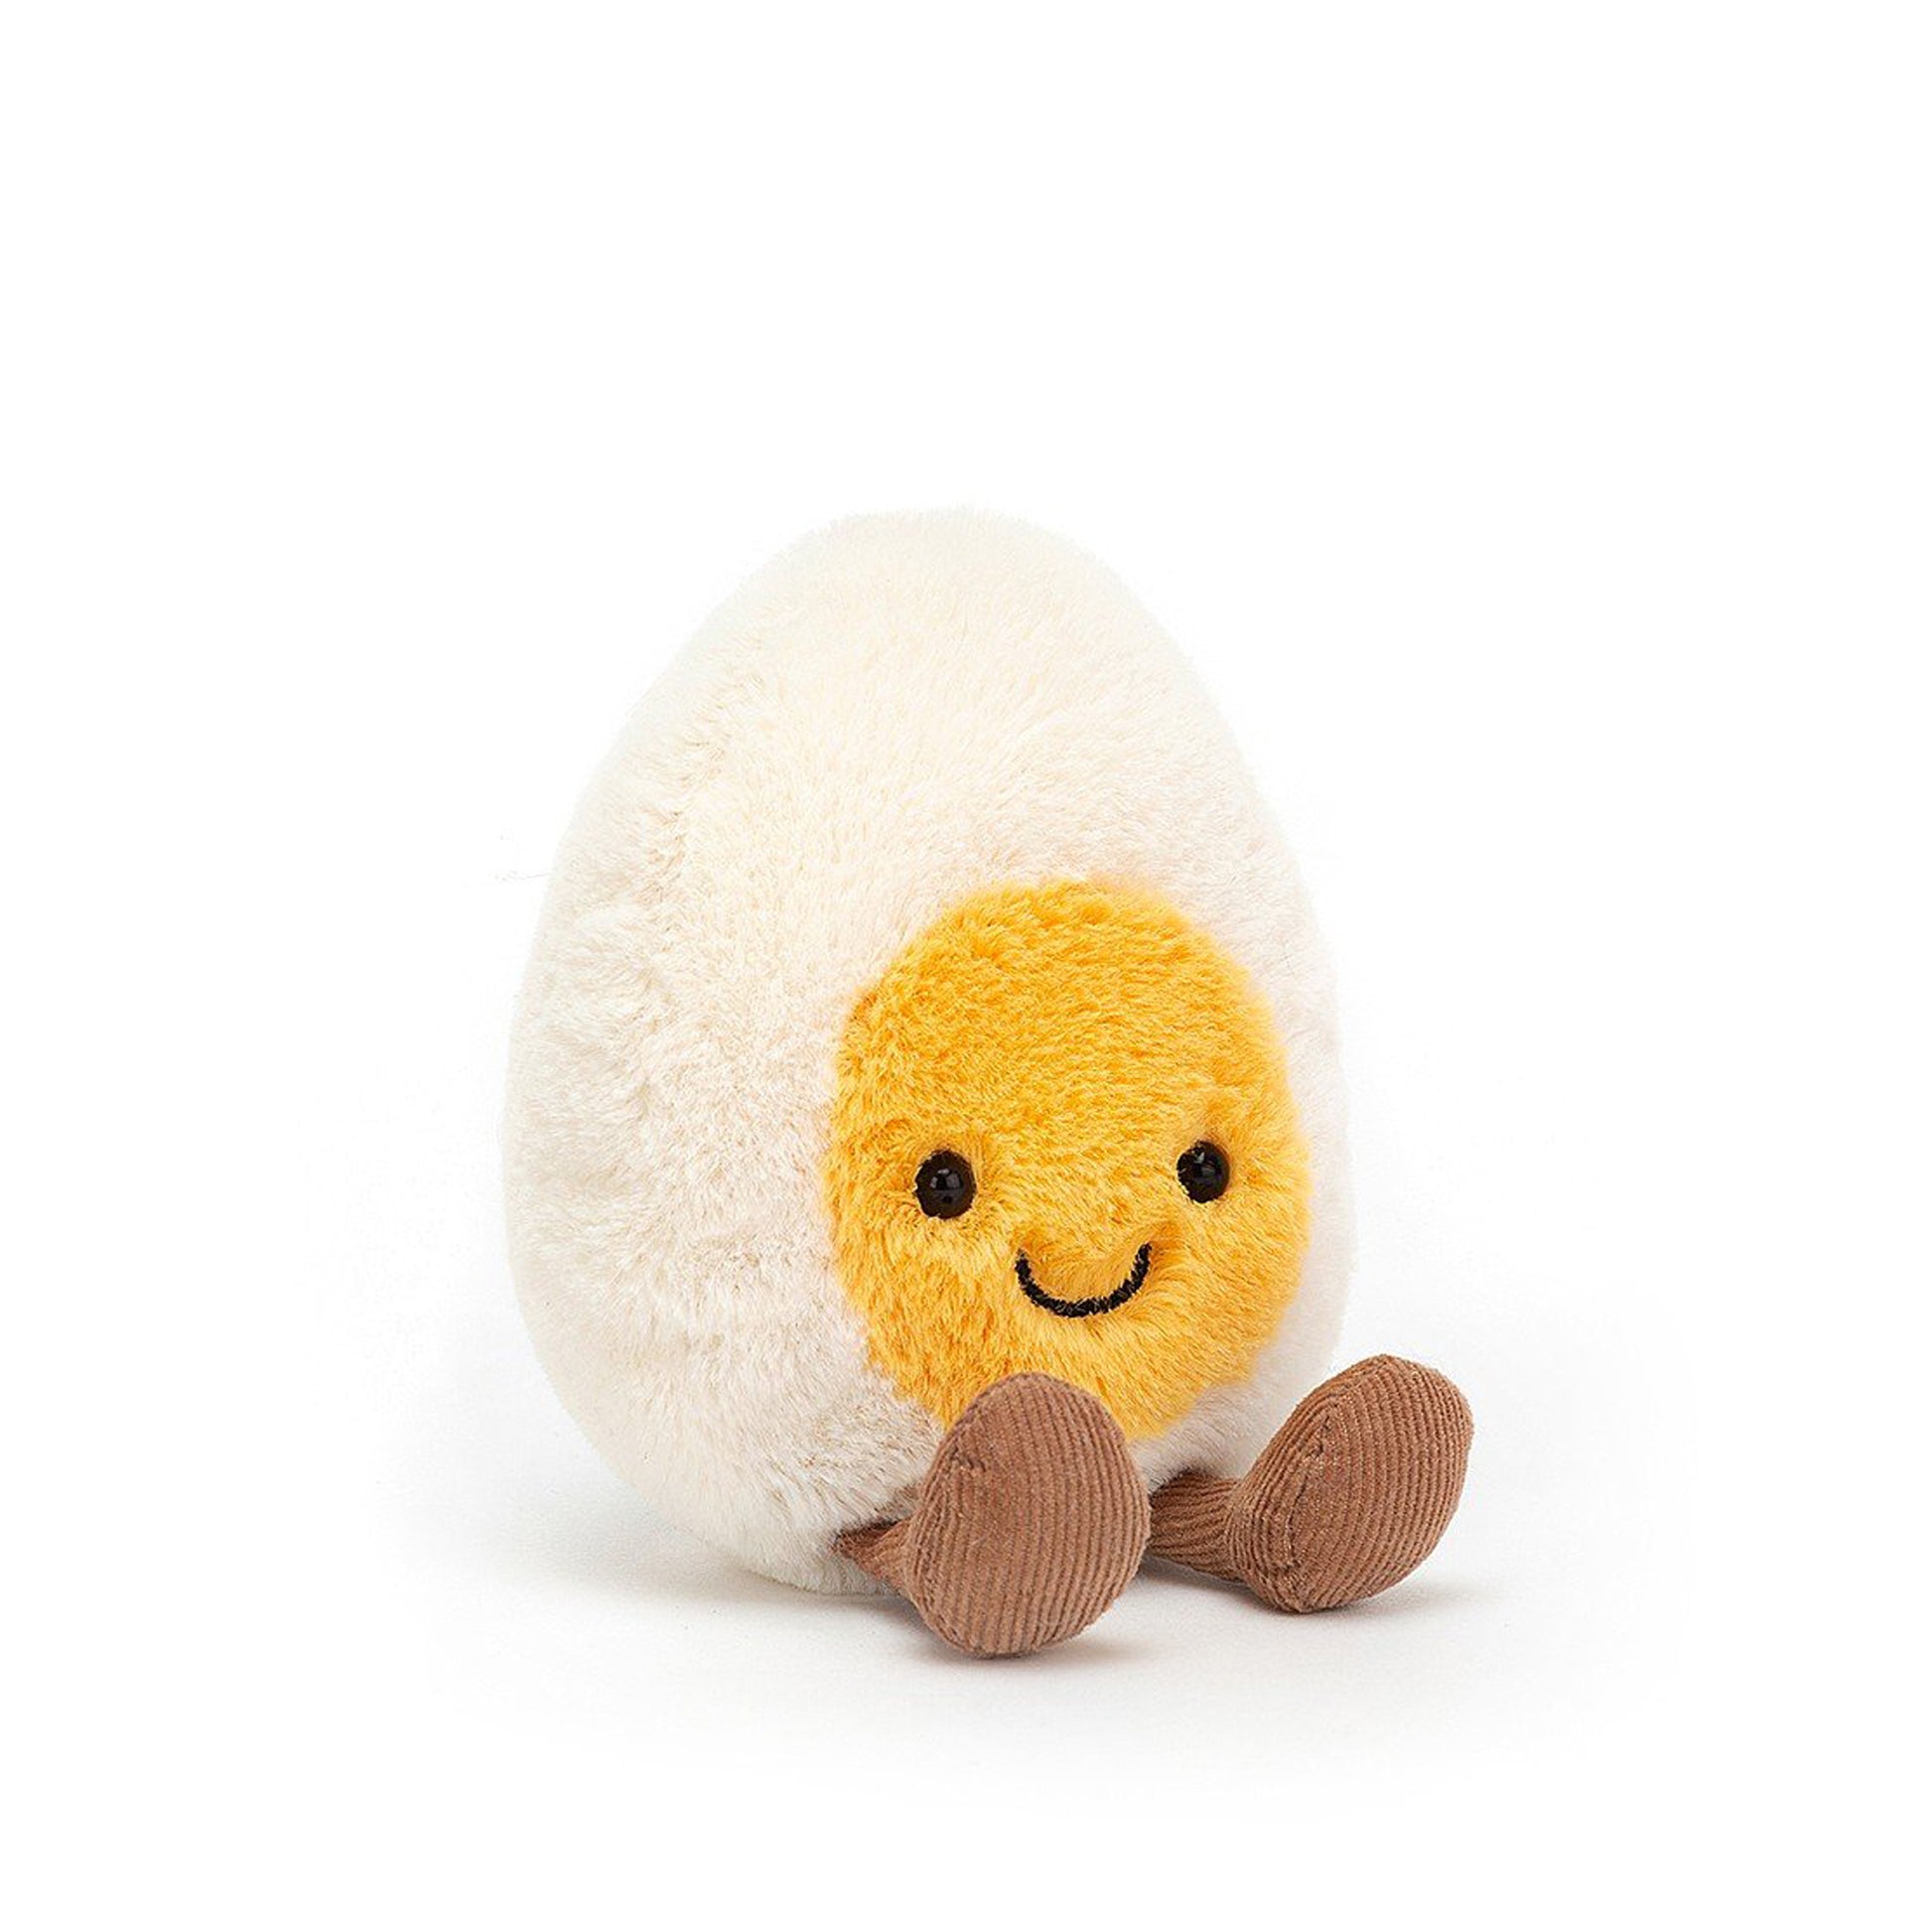 Boiled egg soft toy